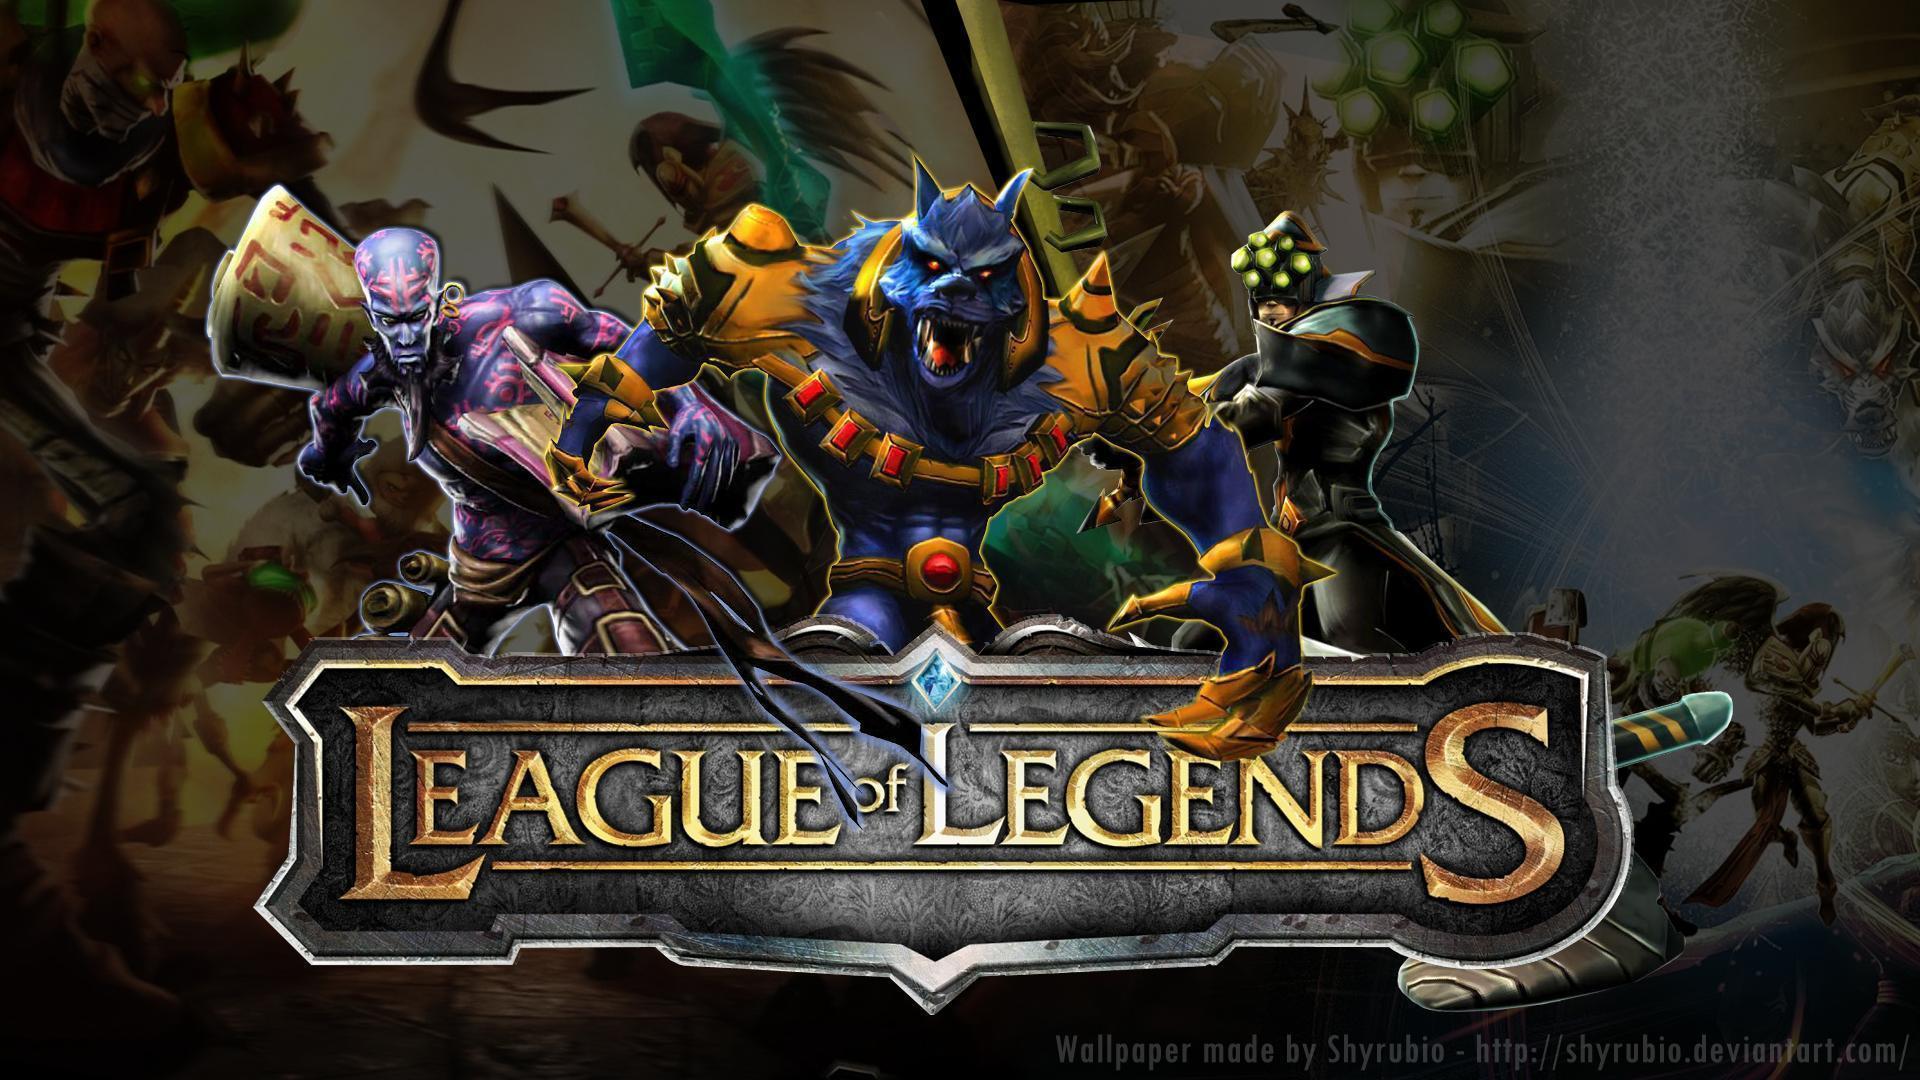 League of Legends Wallpaper [HD] by muamerART on DeviantArt